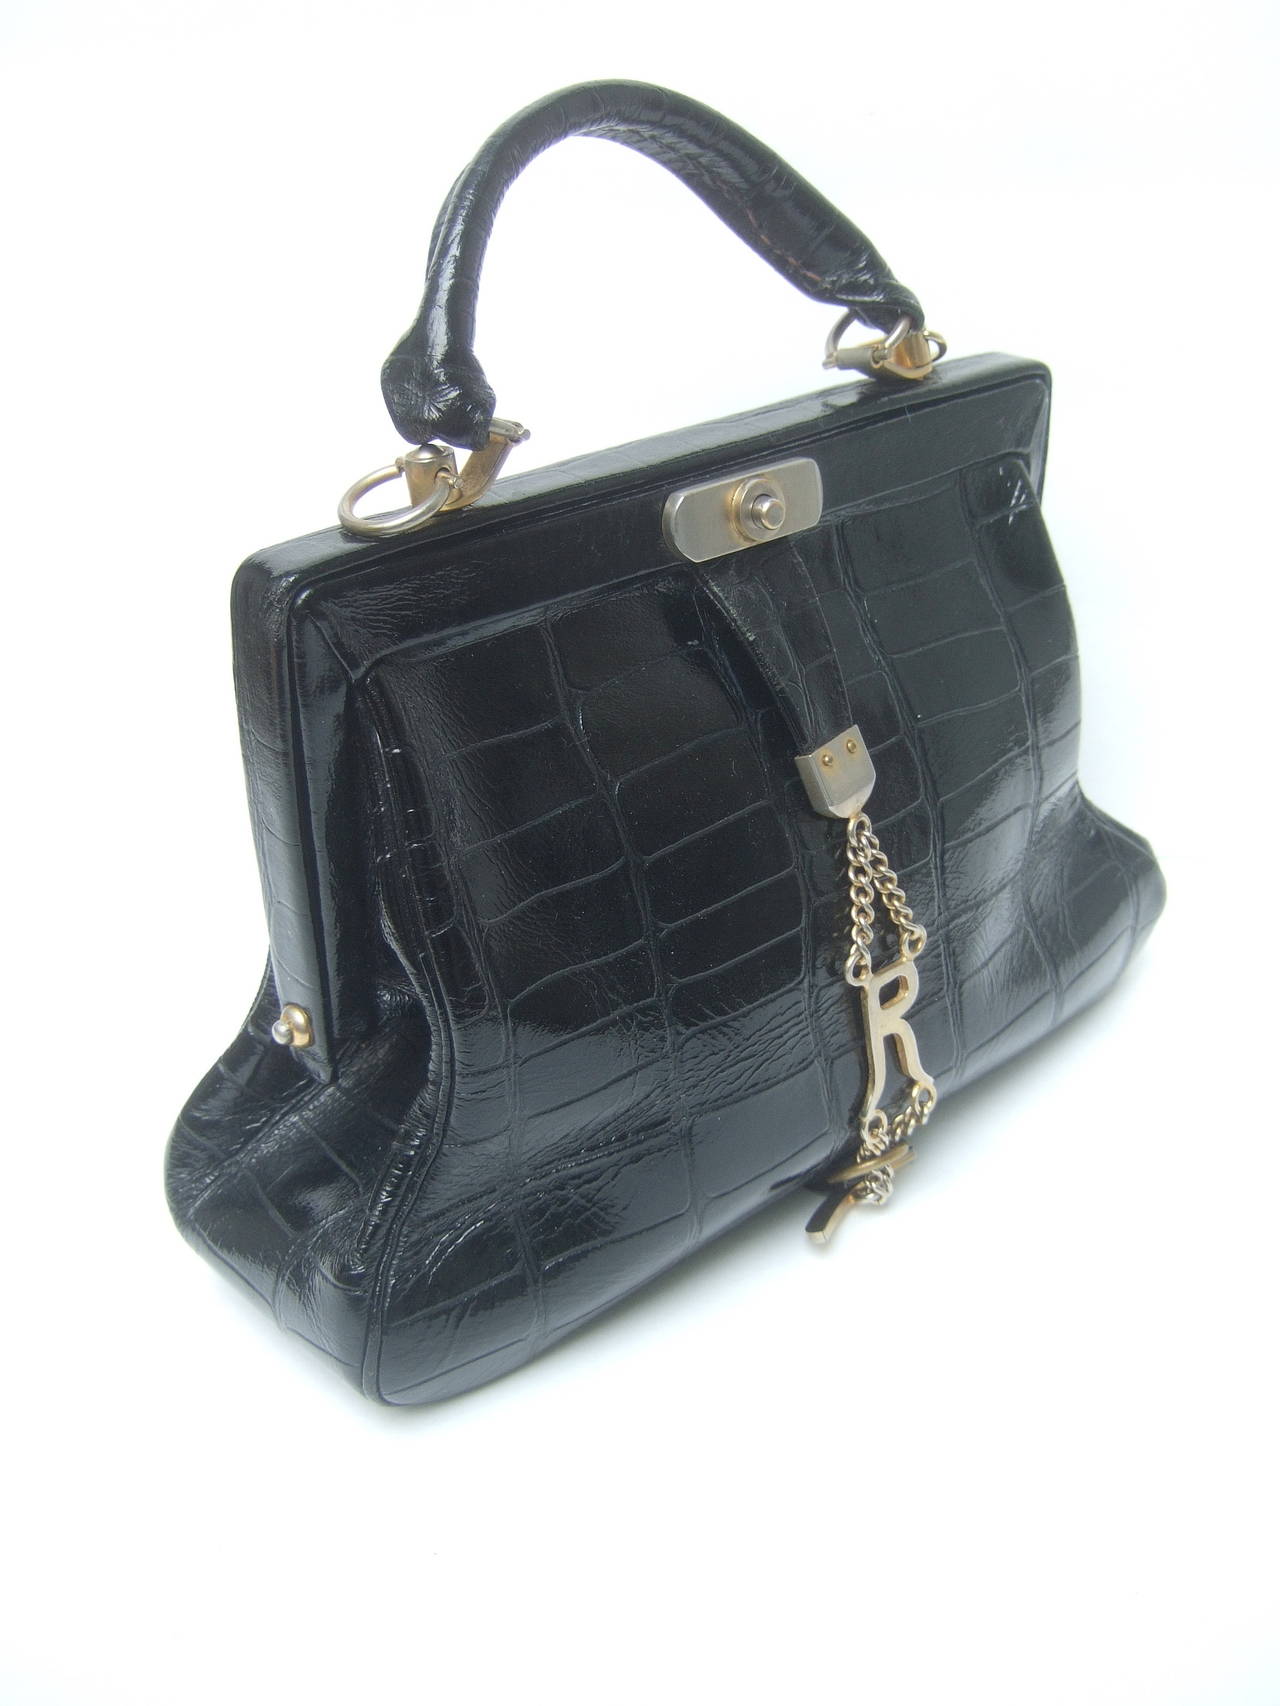 Roberta di Camerino Sleek Embossed Black Leather Handbag Made in Italy c 1960 In Good Condition In University City, MO